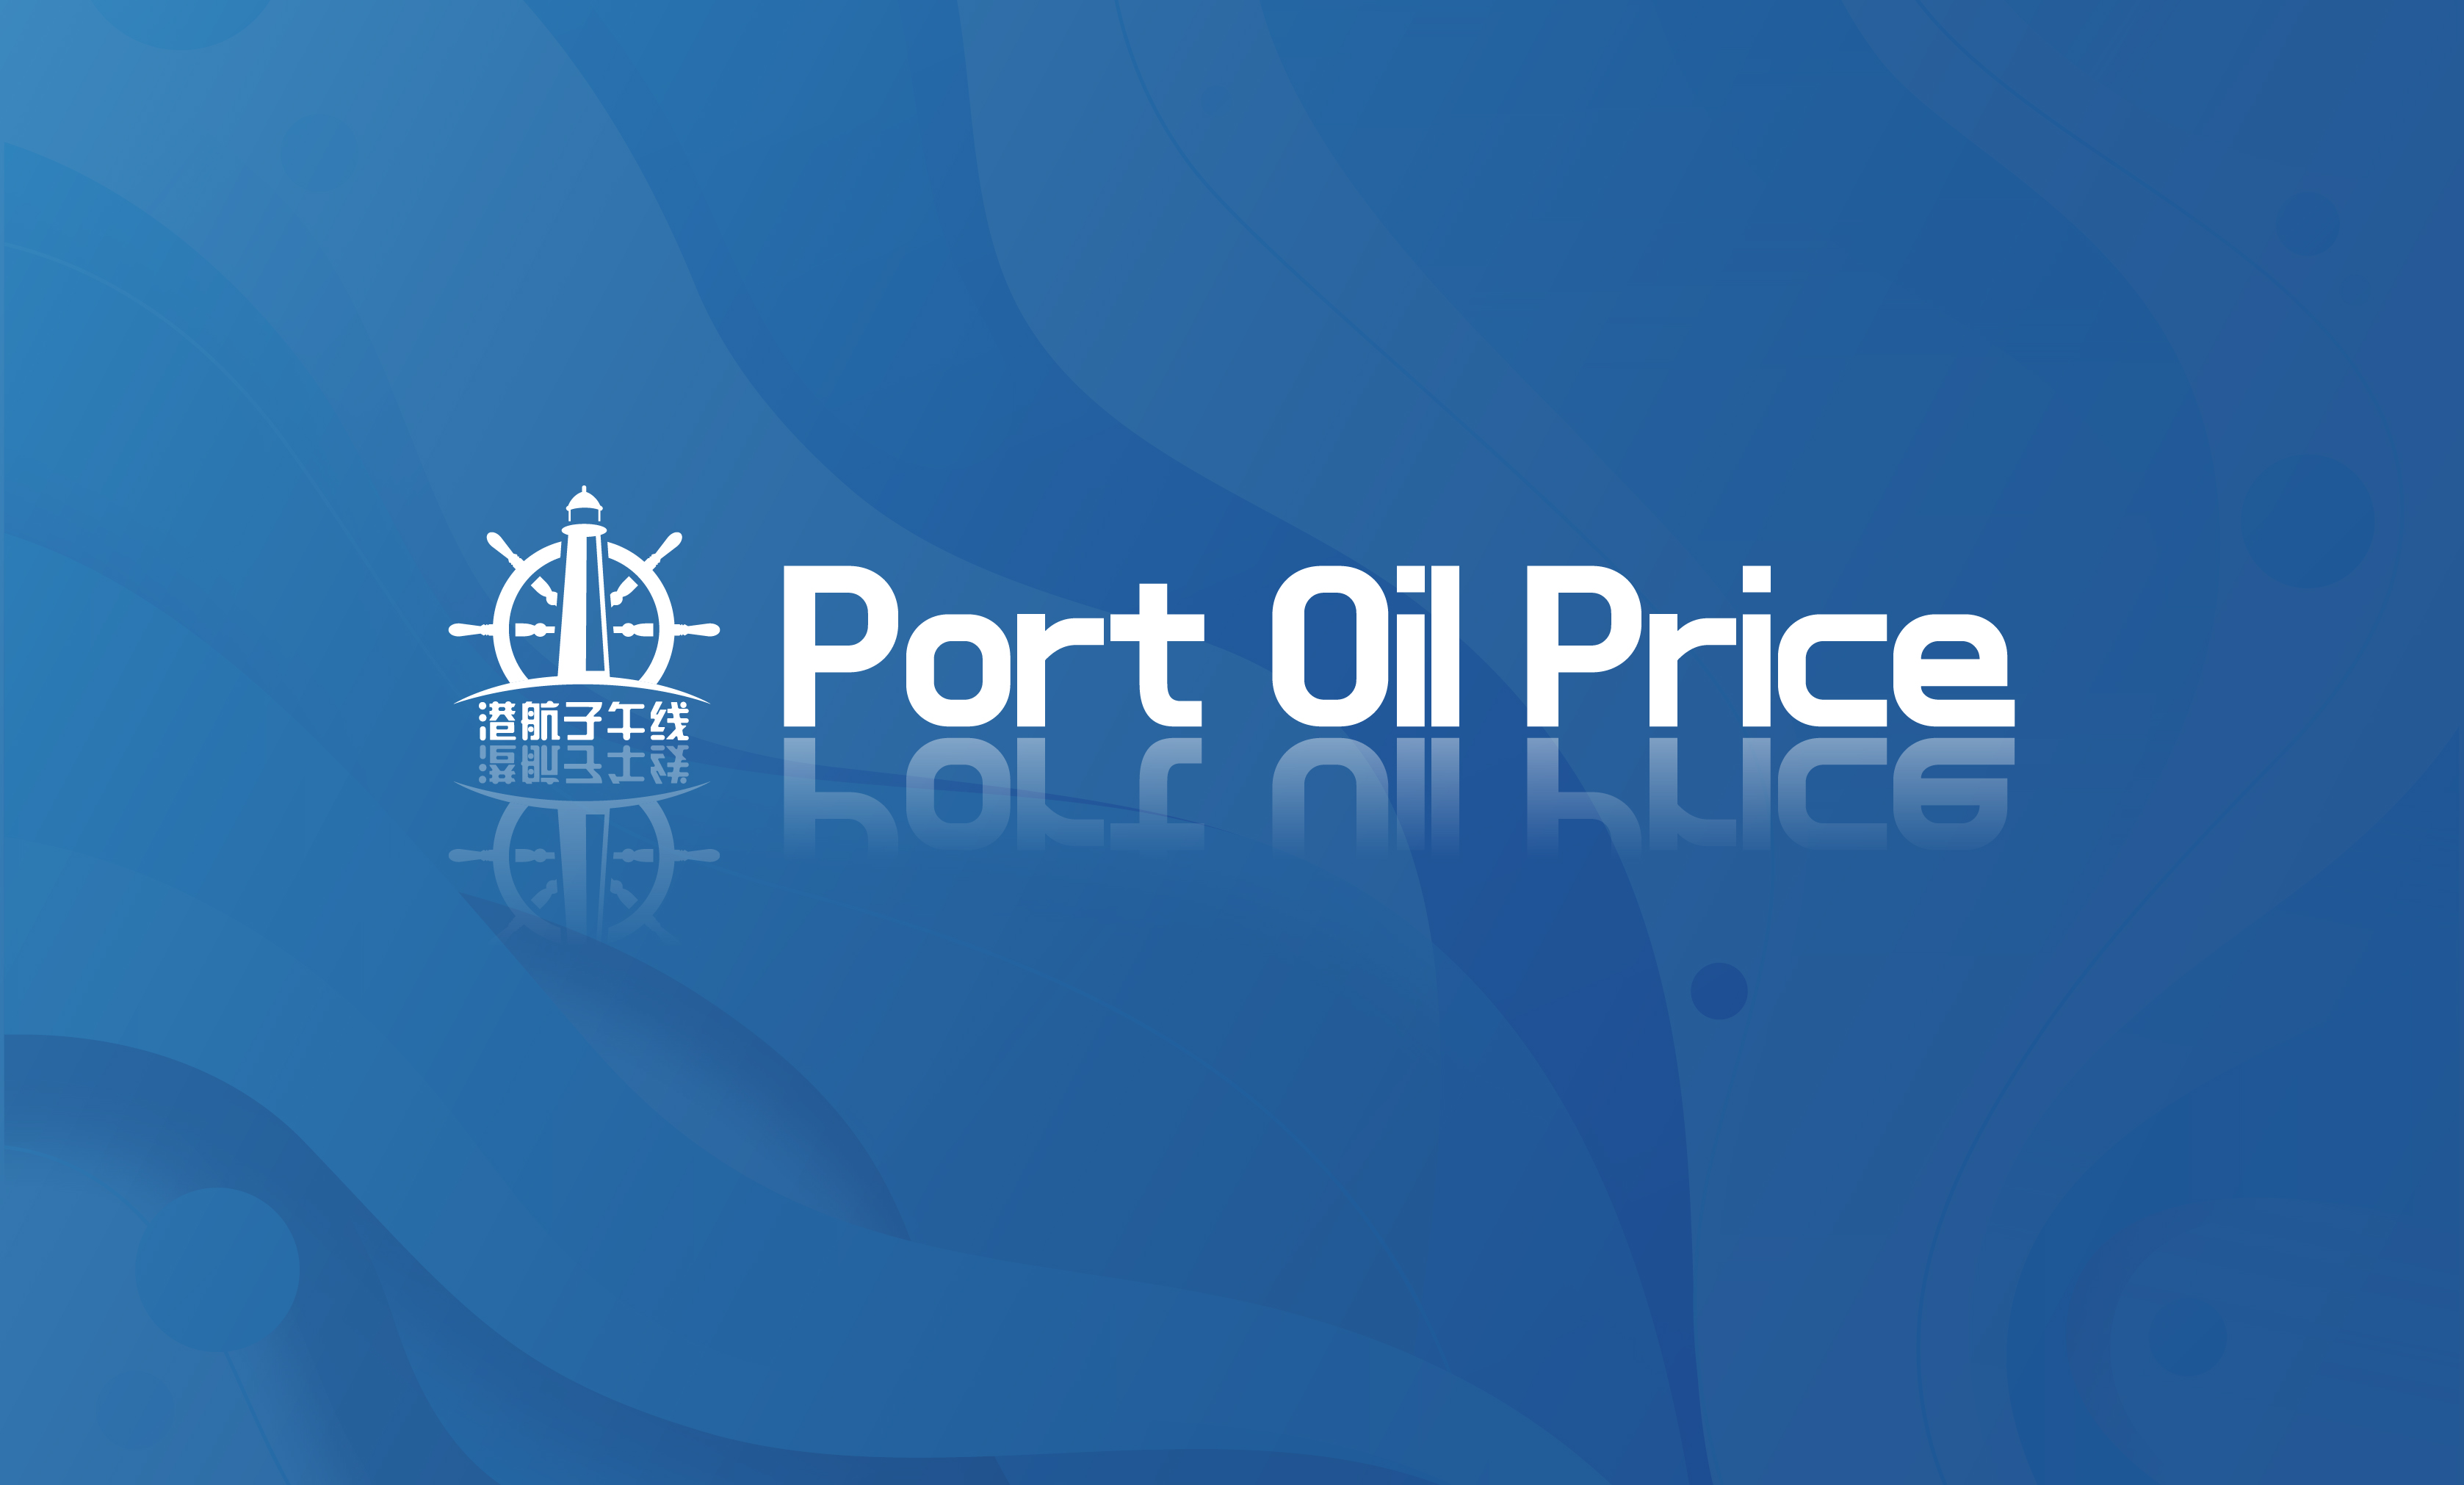 4/22 Oil Price for Global Popular Ports